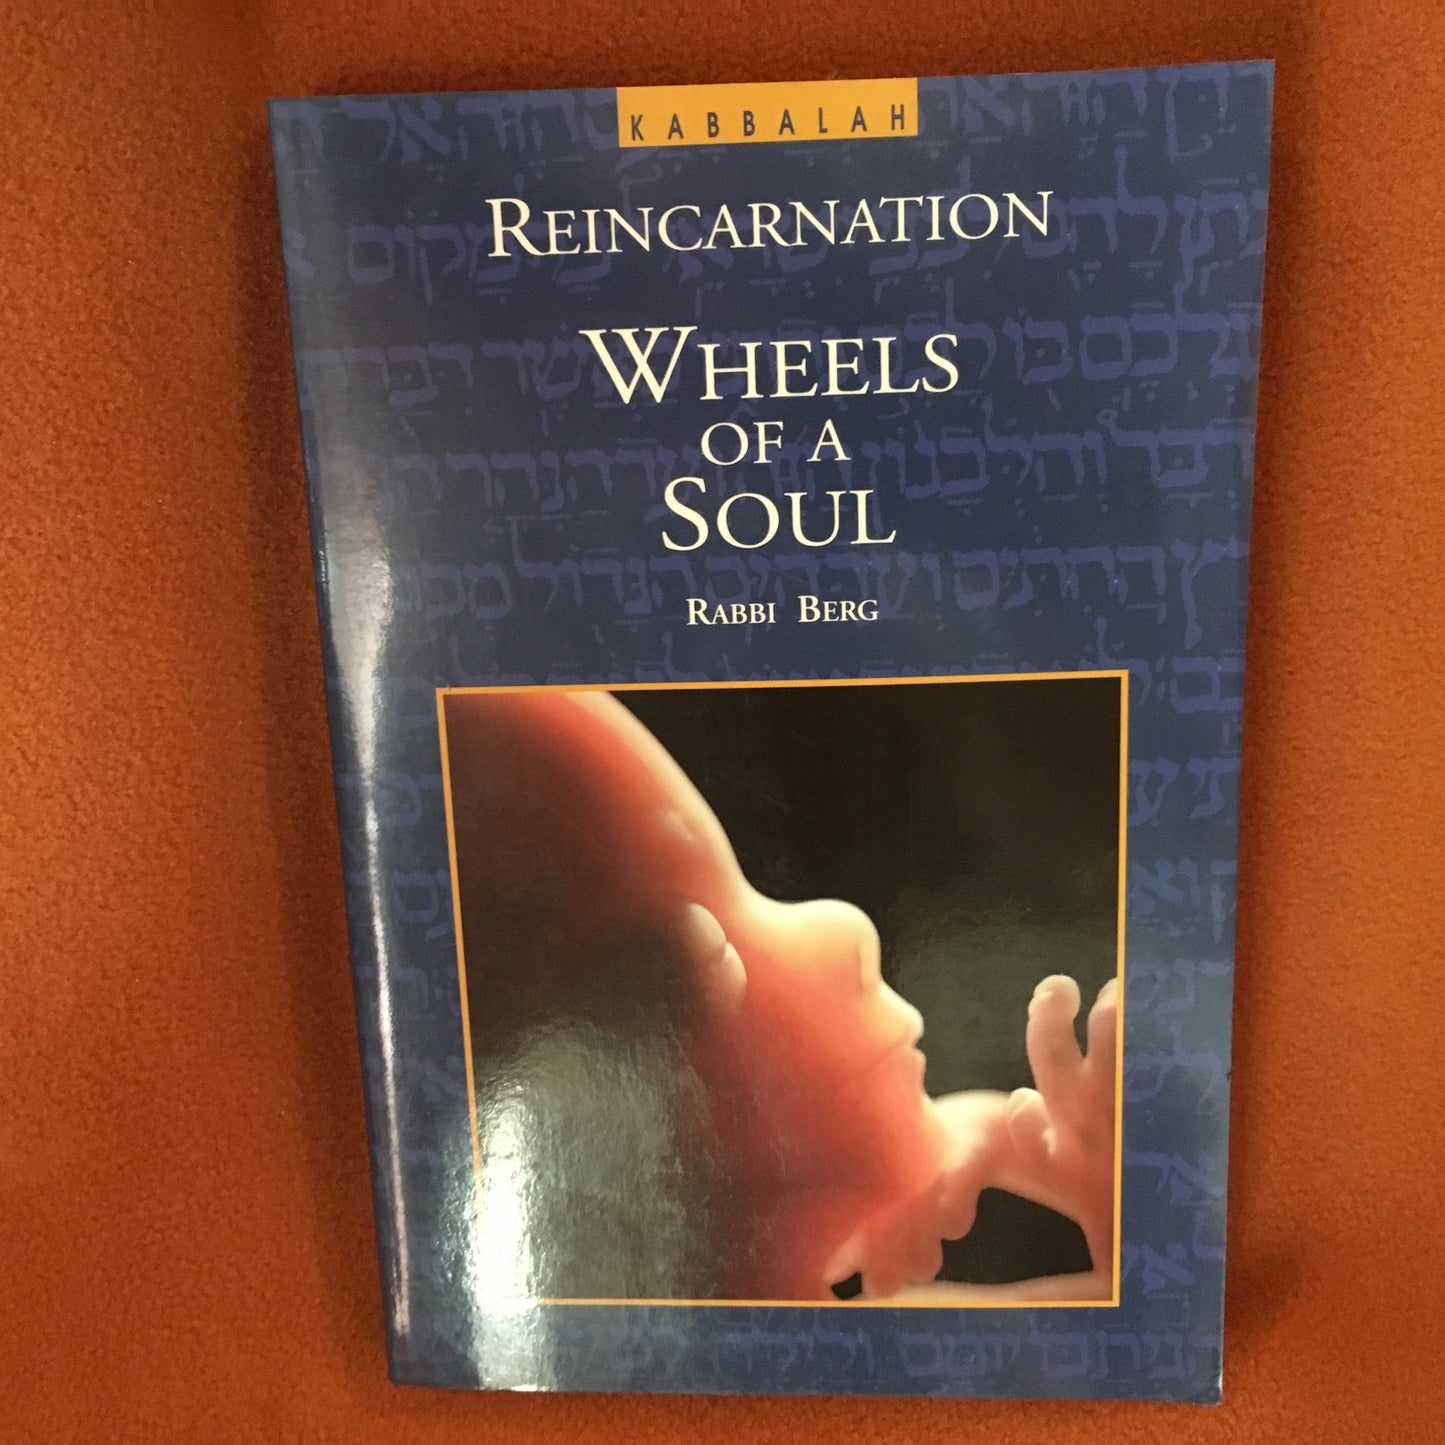 Reincarnation-Wheels of the Soul book